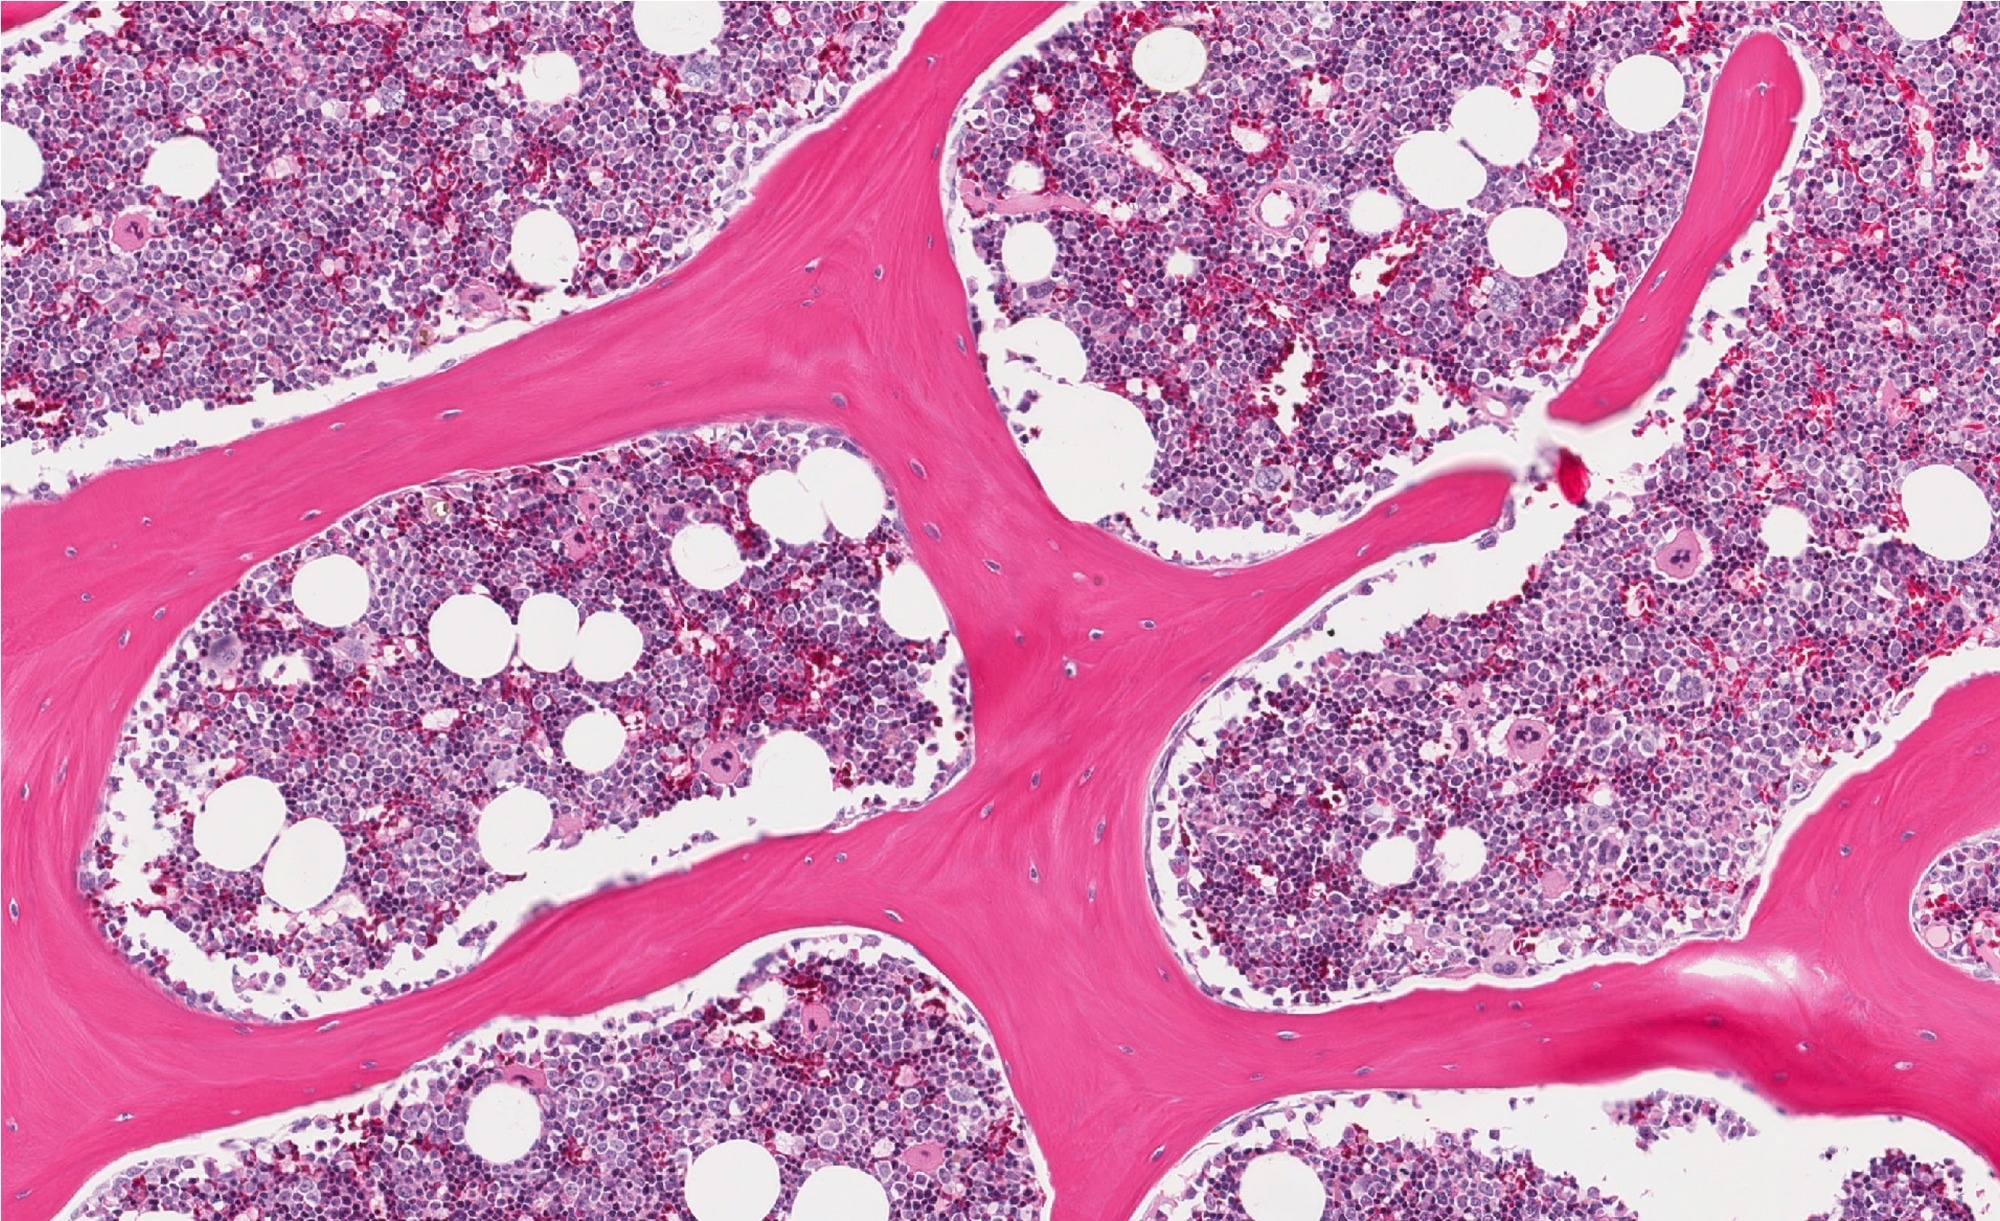 Study: Hematopoietic-specific heterozygous loss of Dnmt3a exacerbates colitis-associated colon cancer. Image Credit: vetpathologist/Shutterstock.com